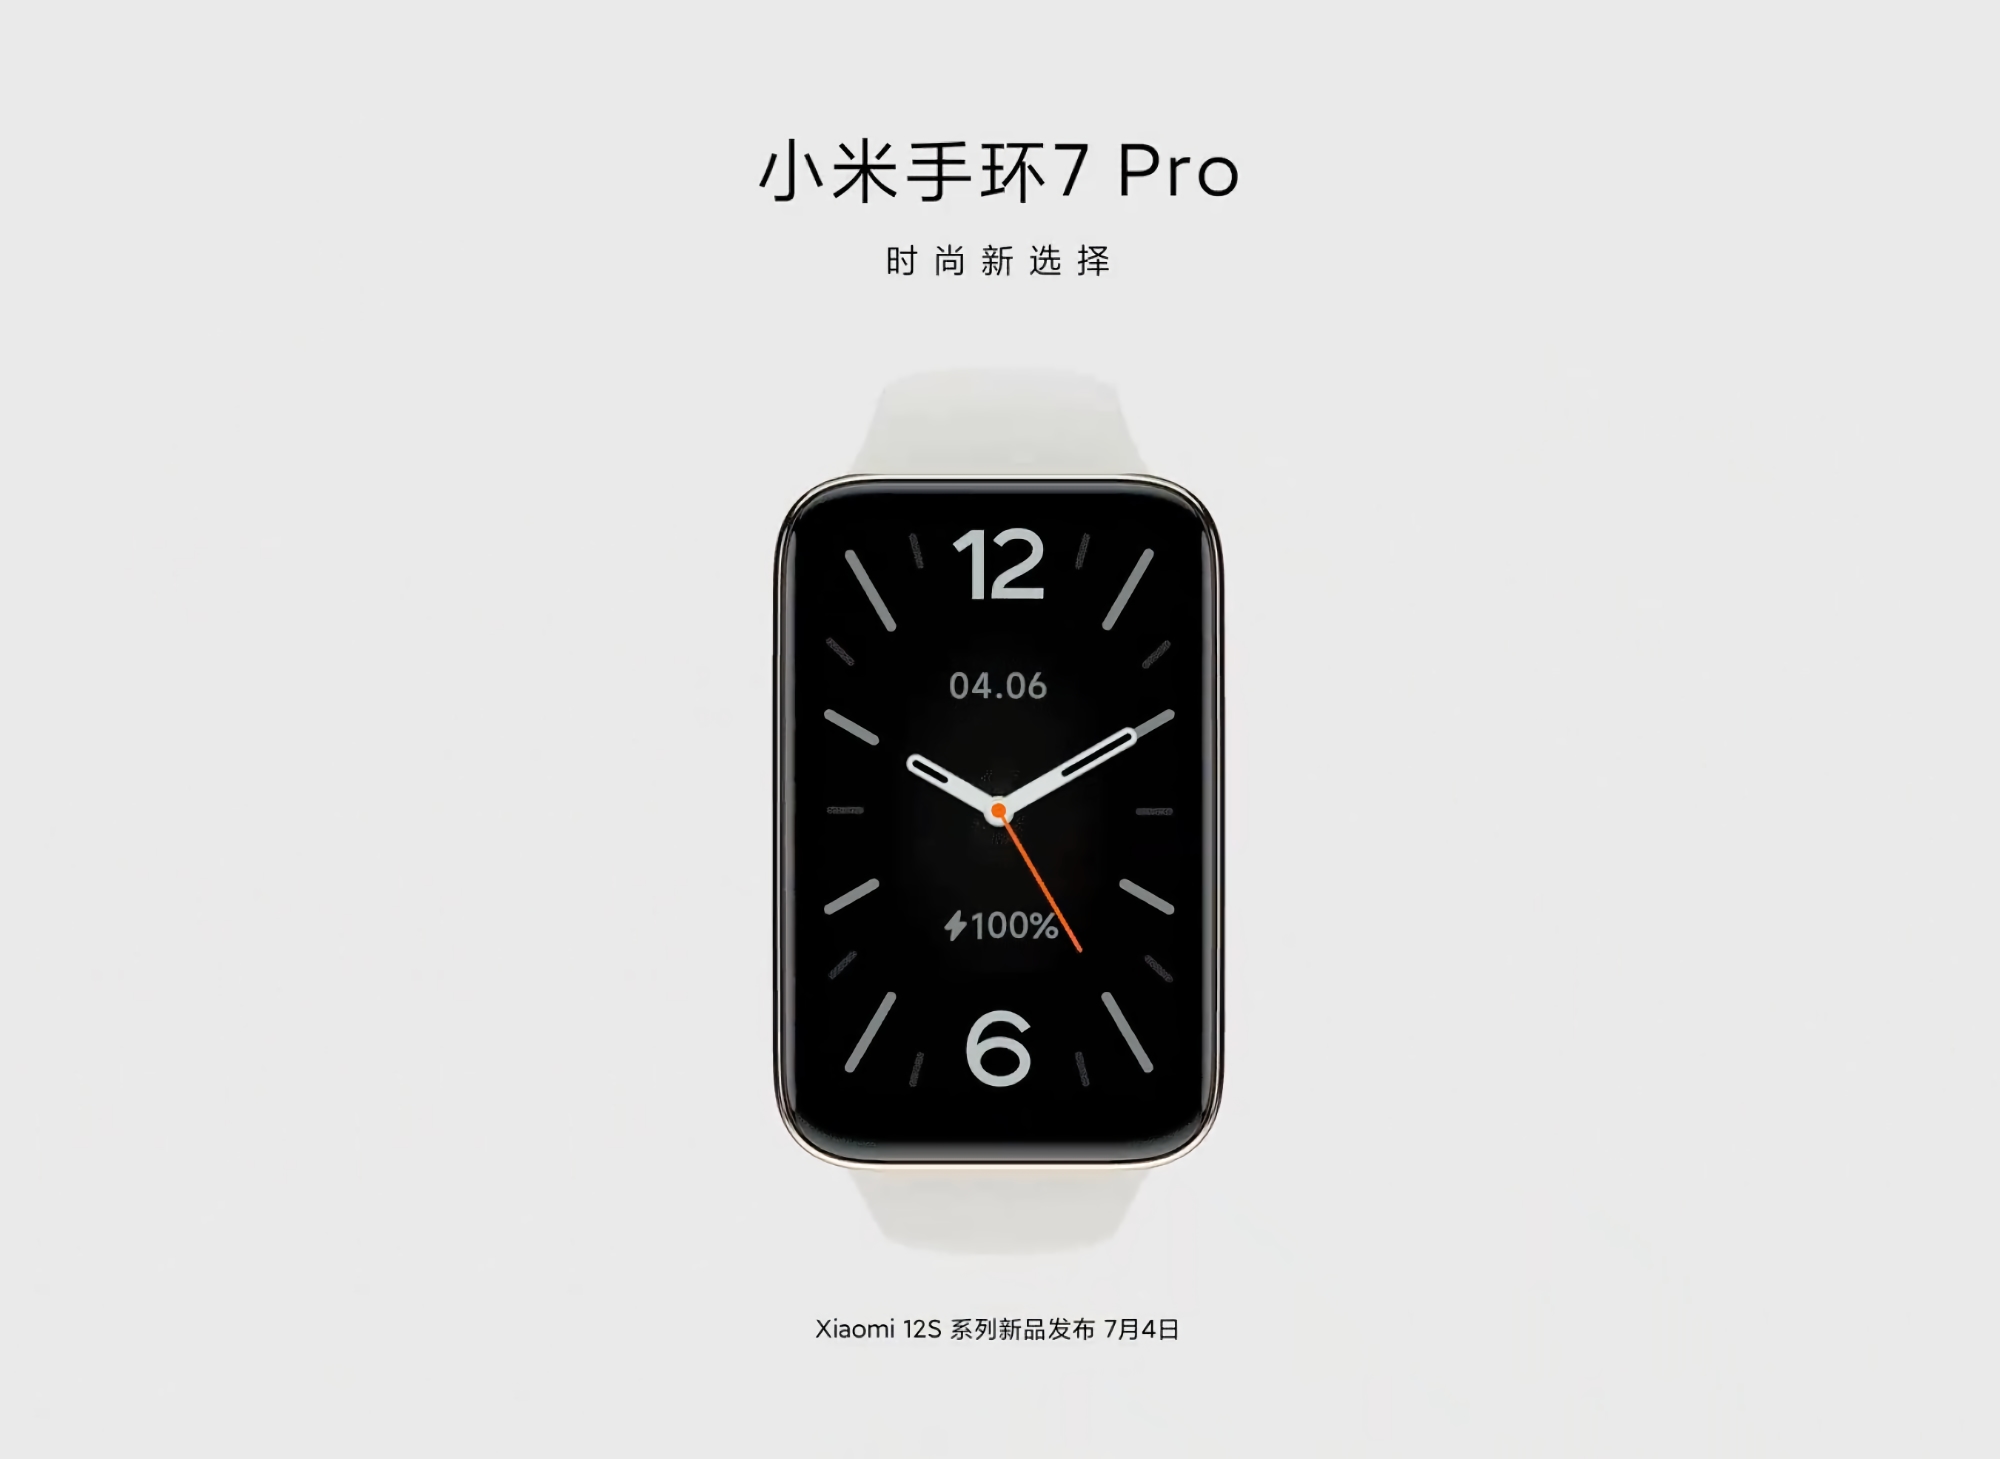 Officiel : Xiaomi Mi Band 7 Pro sera présenté avec la gamme de smartphones Xiaomi 12S le 4 juillet